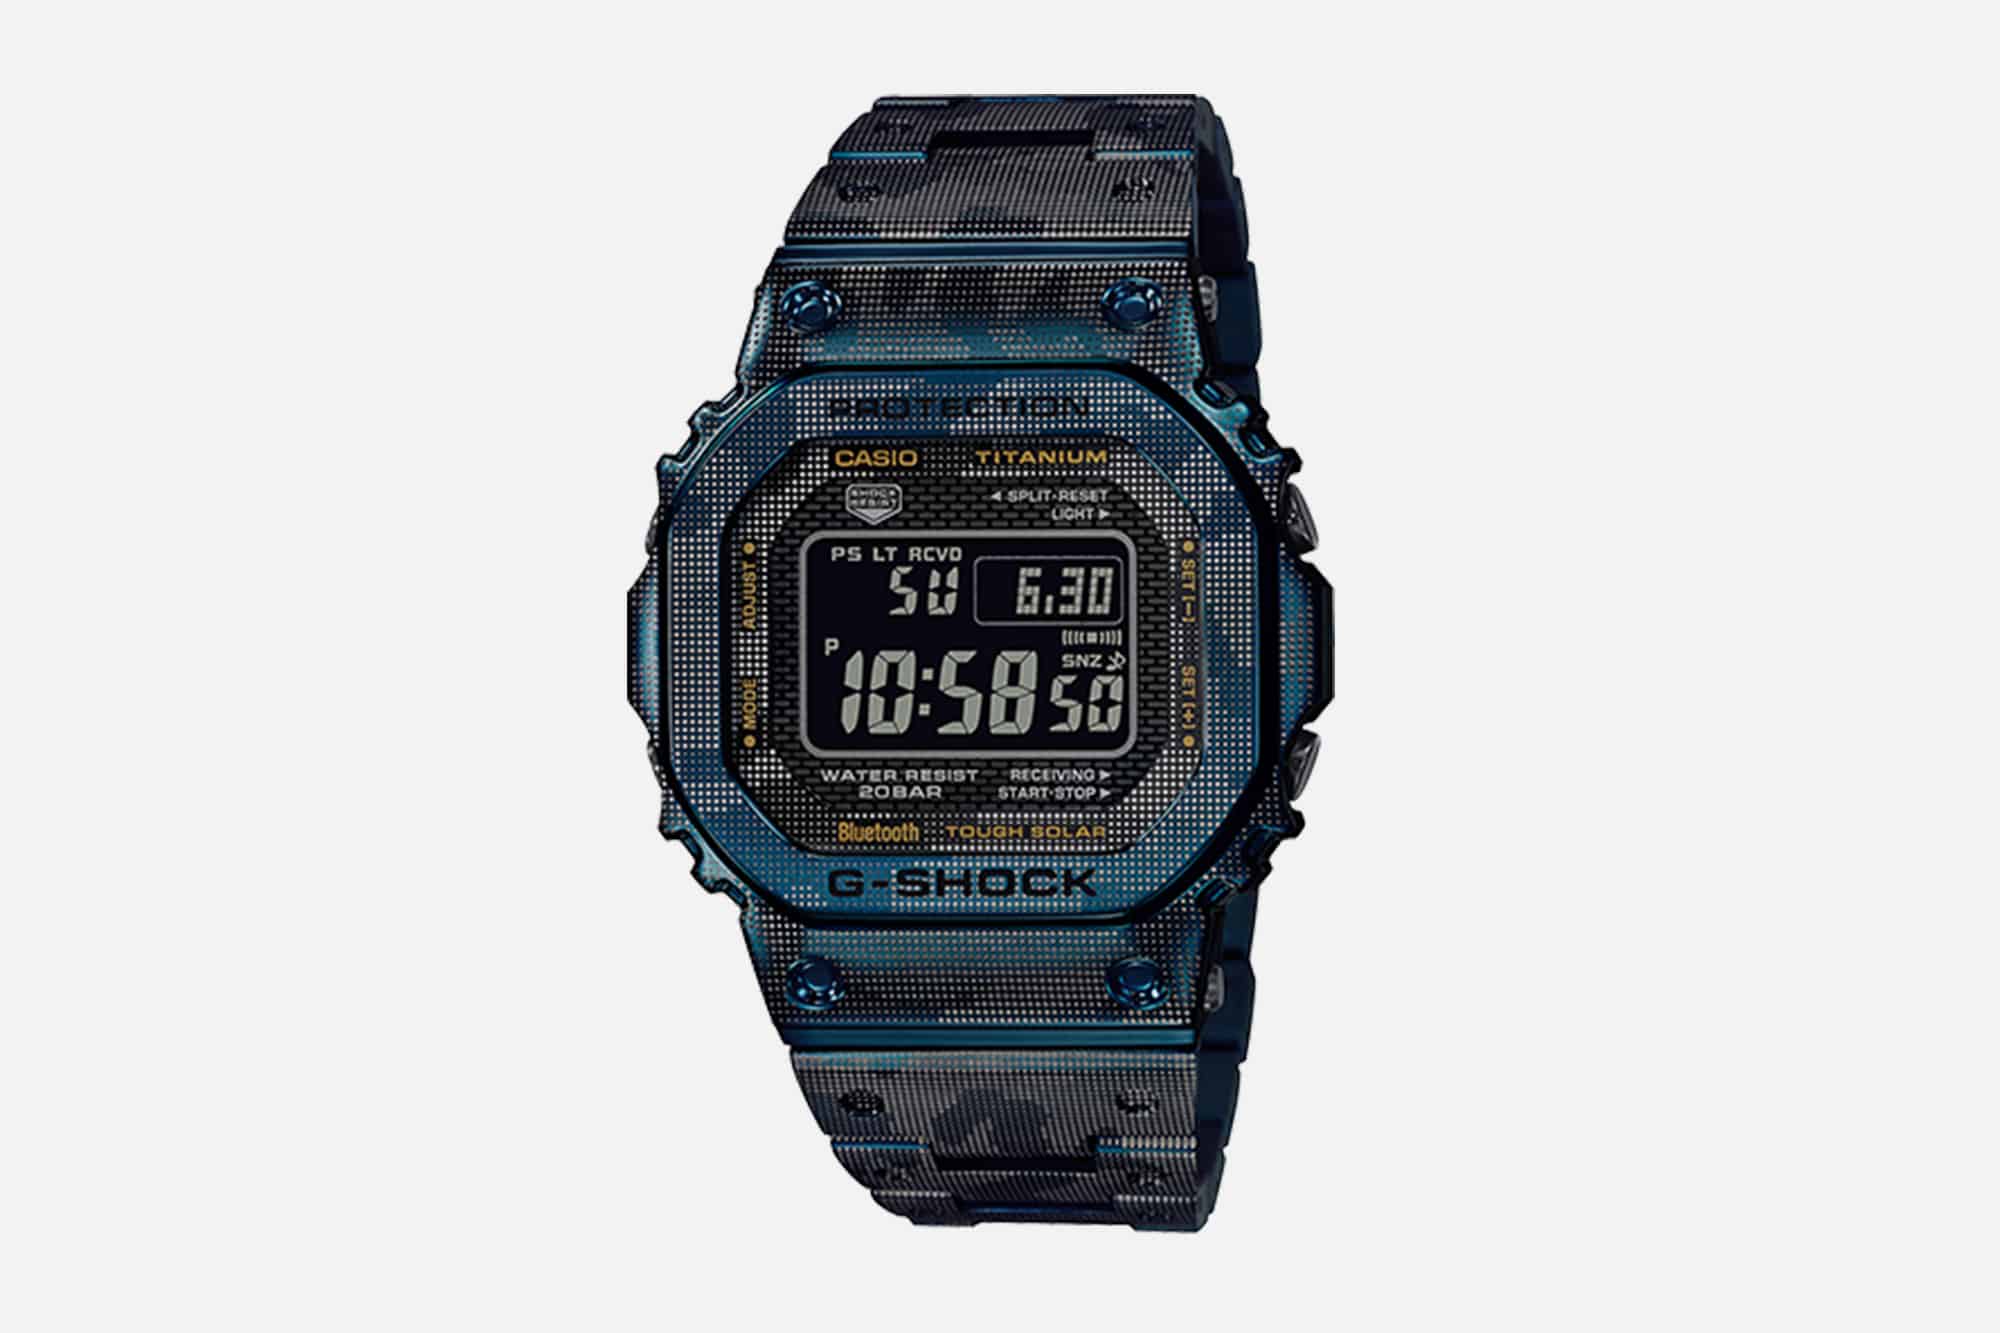 G-Shock’s Laser Printed Camo Pattern Returns in Blue